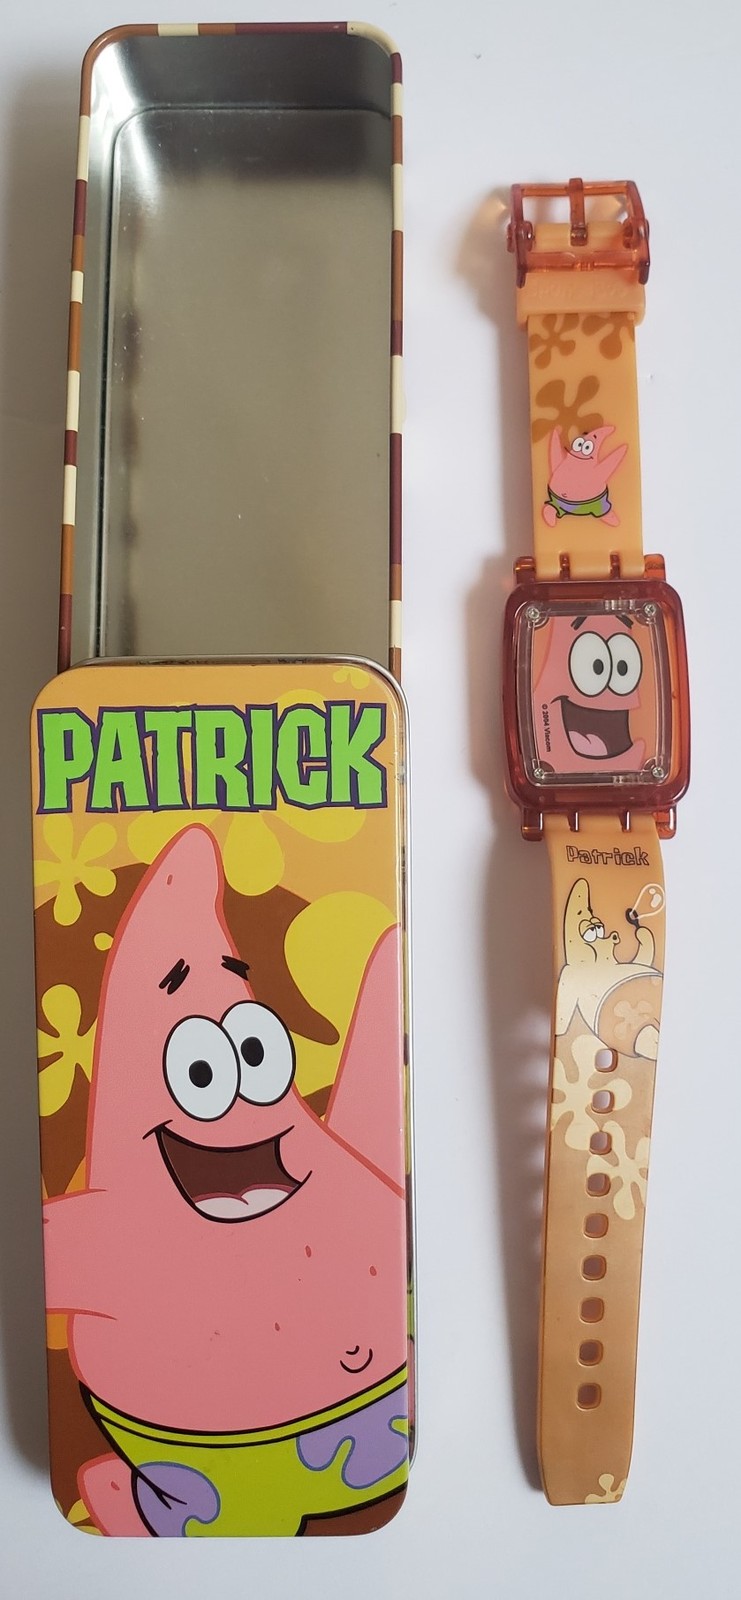 Sponge Bob Patrick Starfish collectible digital watch, vintage - $12.95